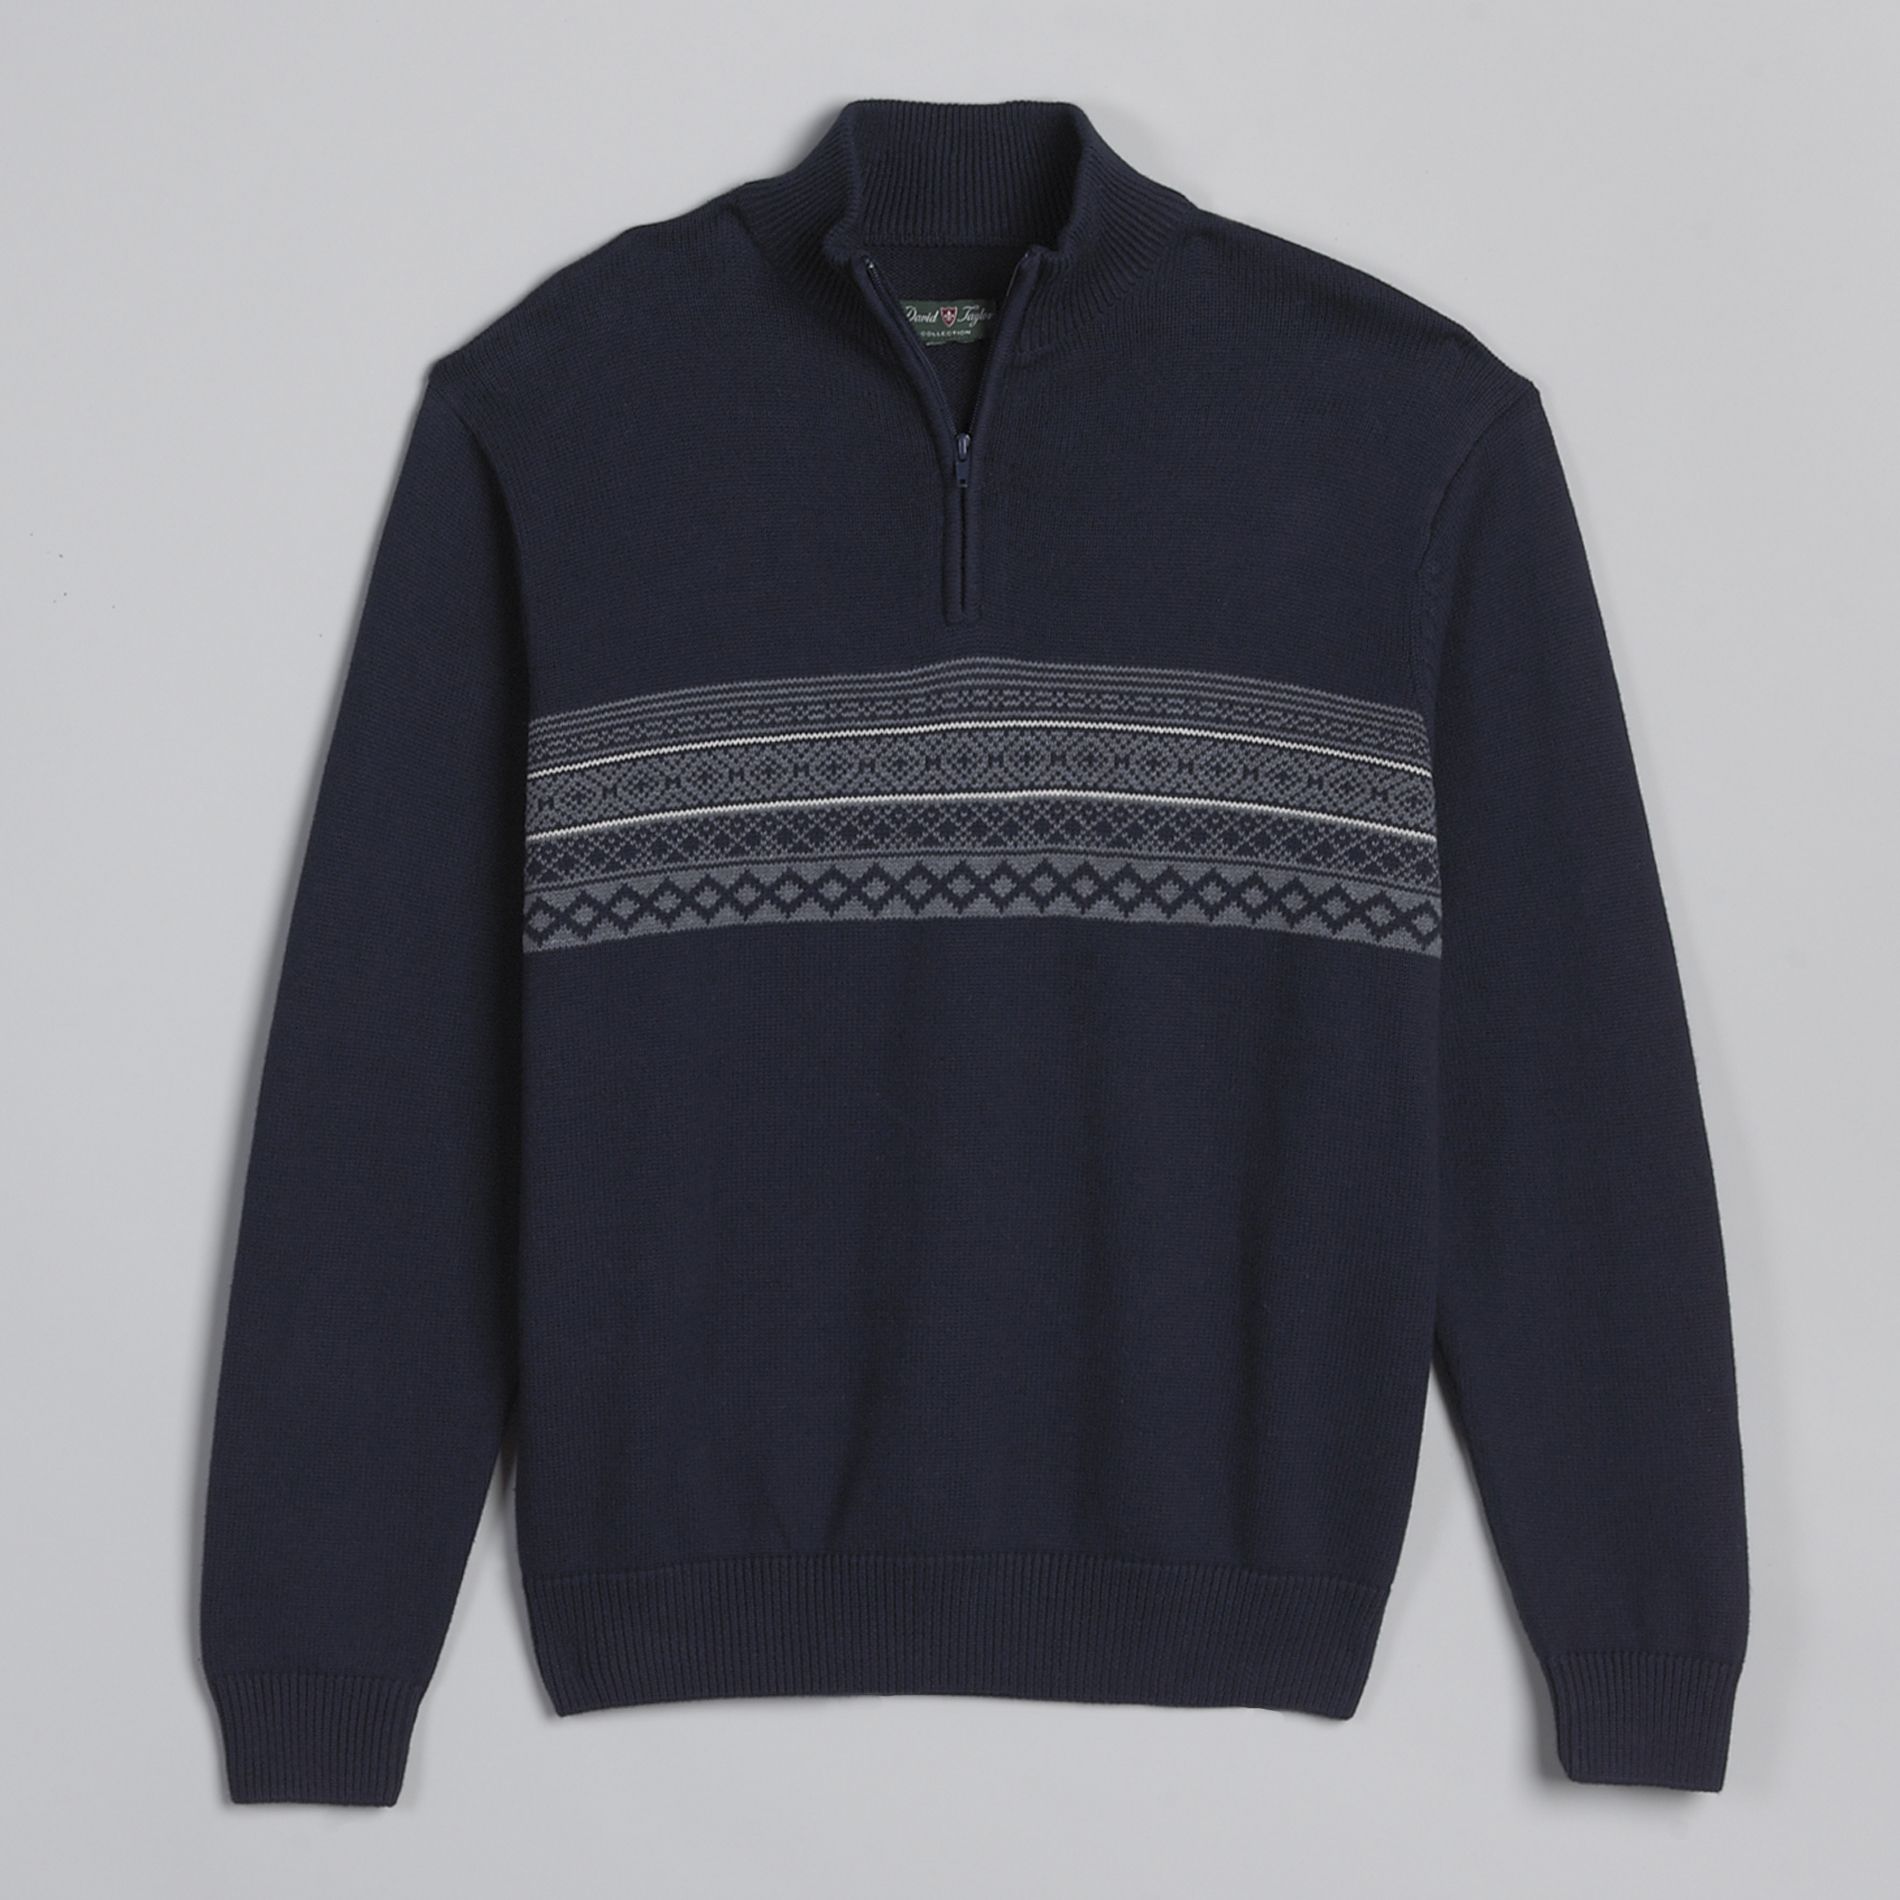 David Taylor Collection Men's Fairisle 1/4 Zip Sweater